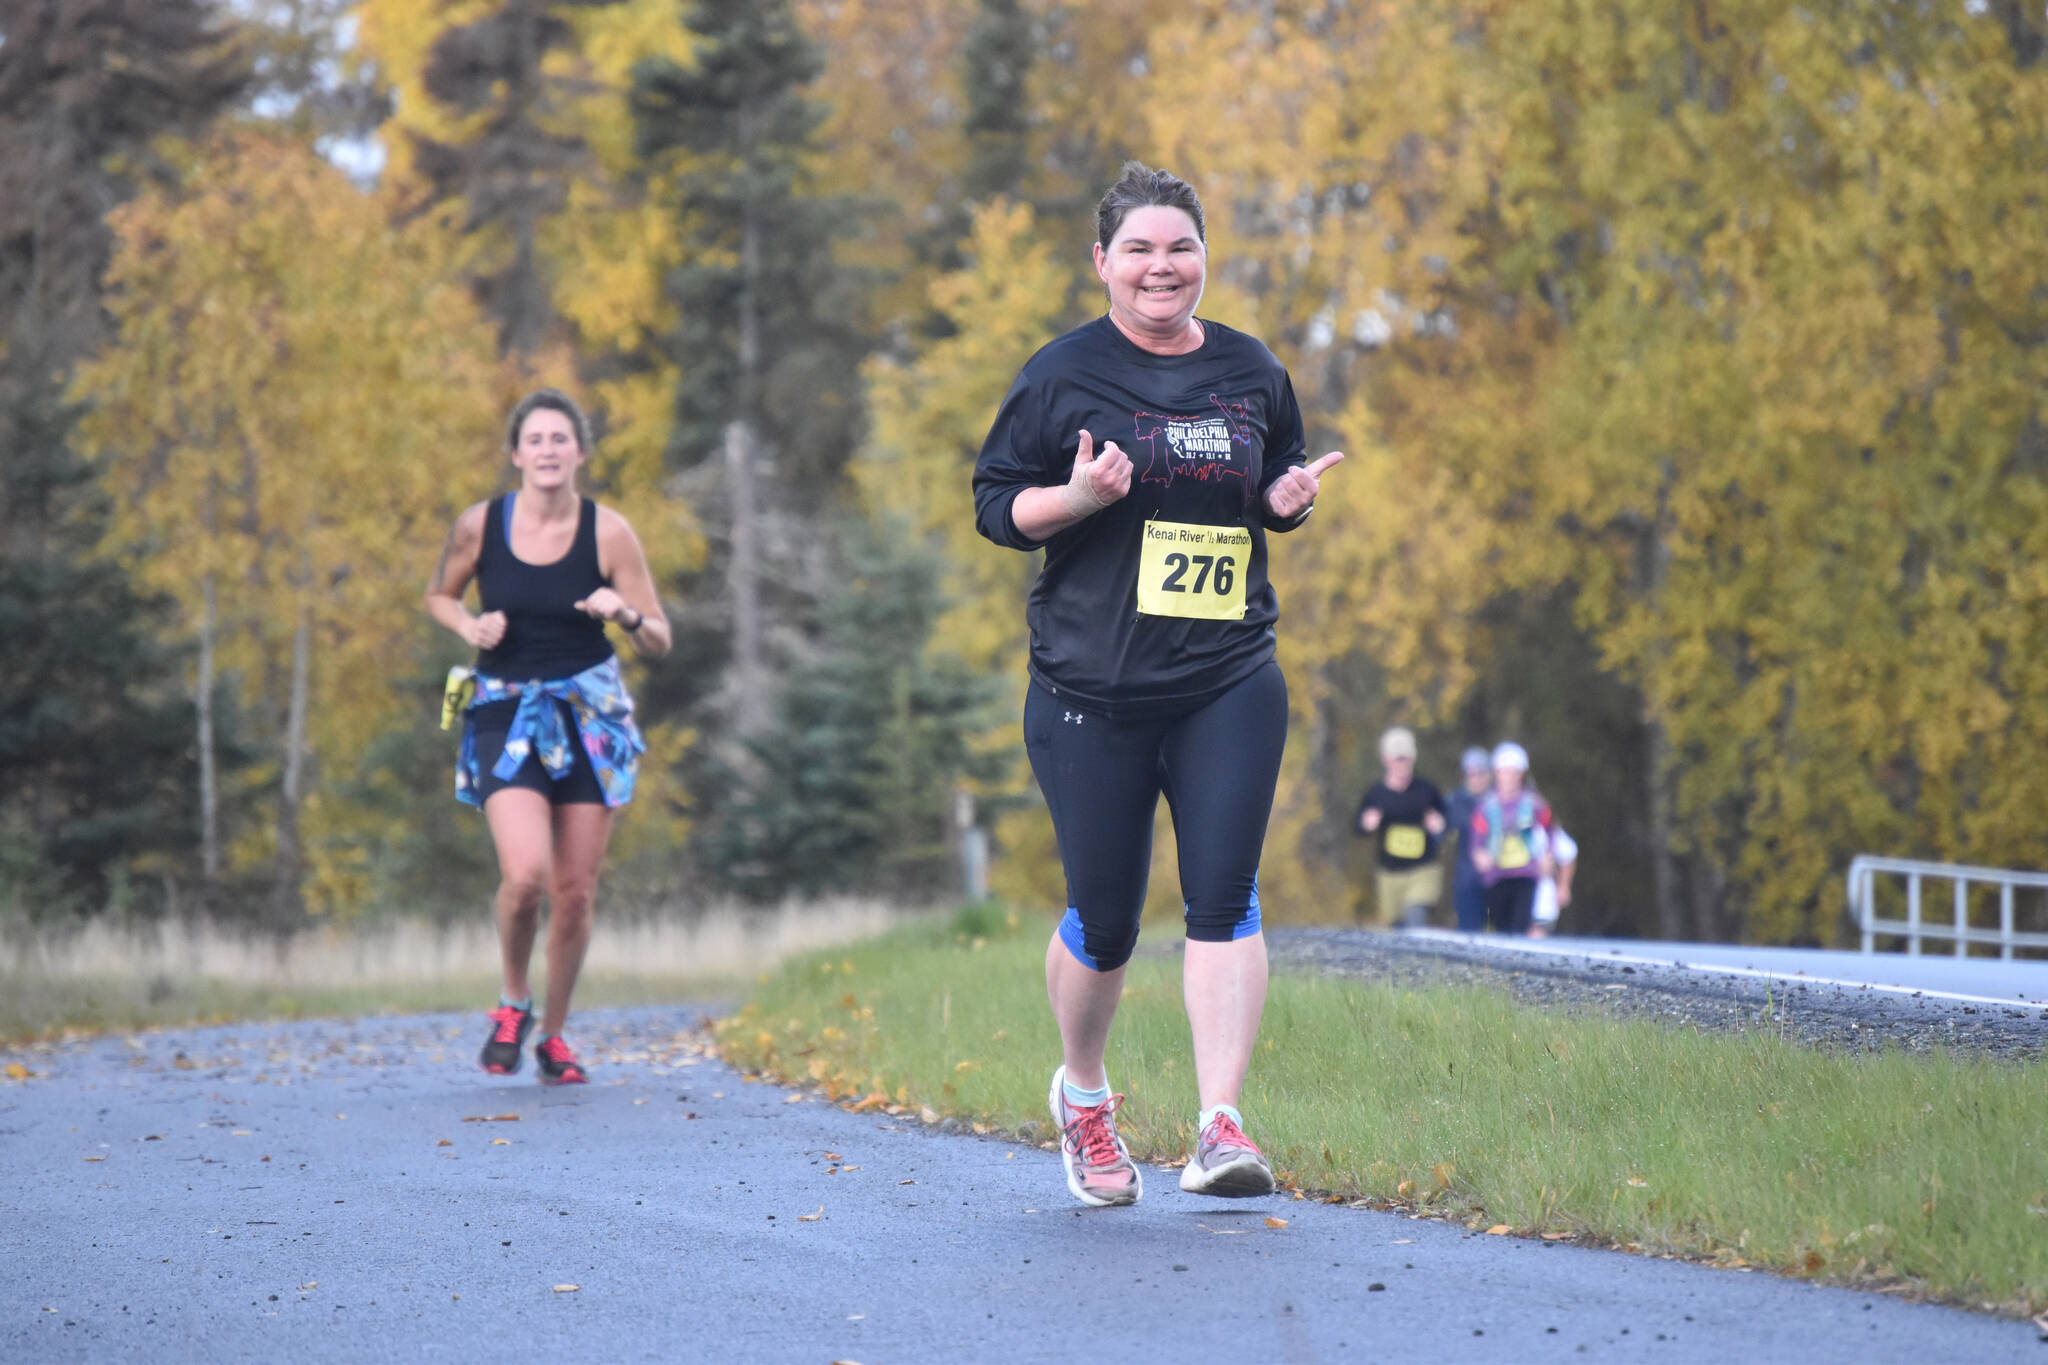 Deann Denter runs to 13th in the women’s half marathon on Sunday, Sept. 25, 2022, at the Kenai River Marathon in Kenai, Alaska. (Photo by Jeff Helminiak/Peninsula Clarion)